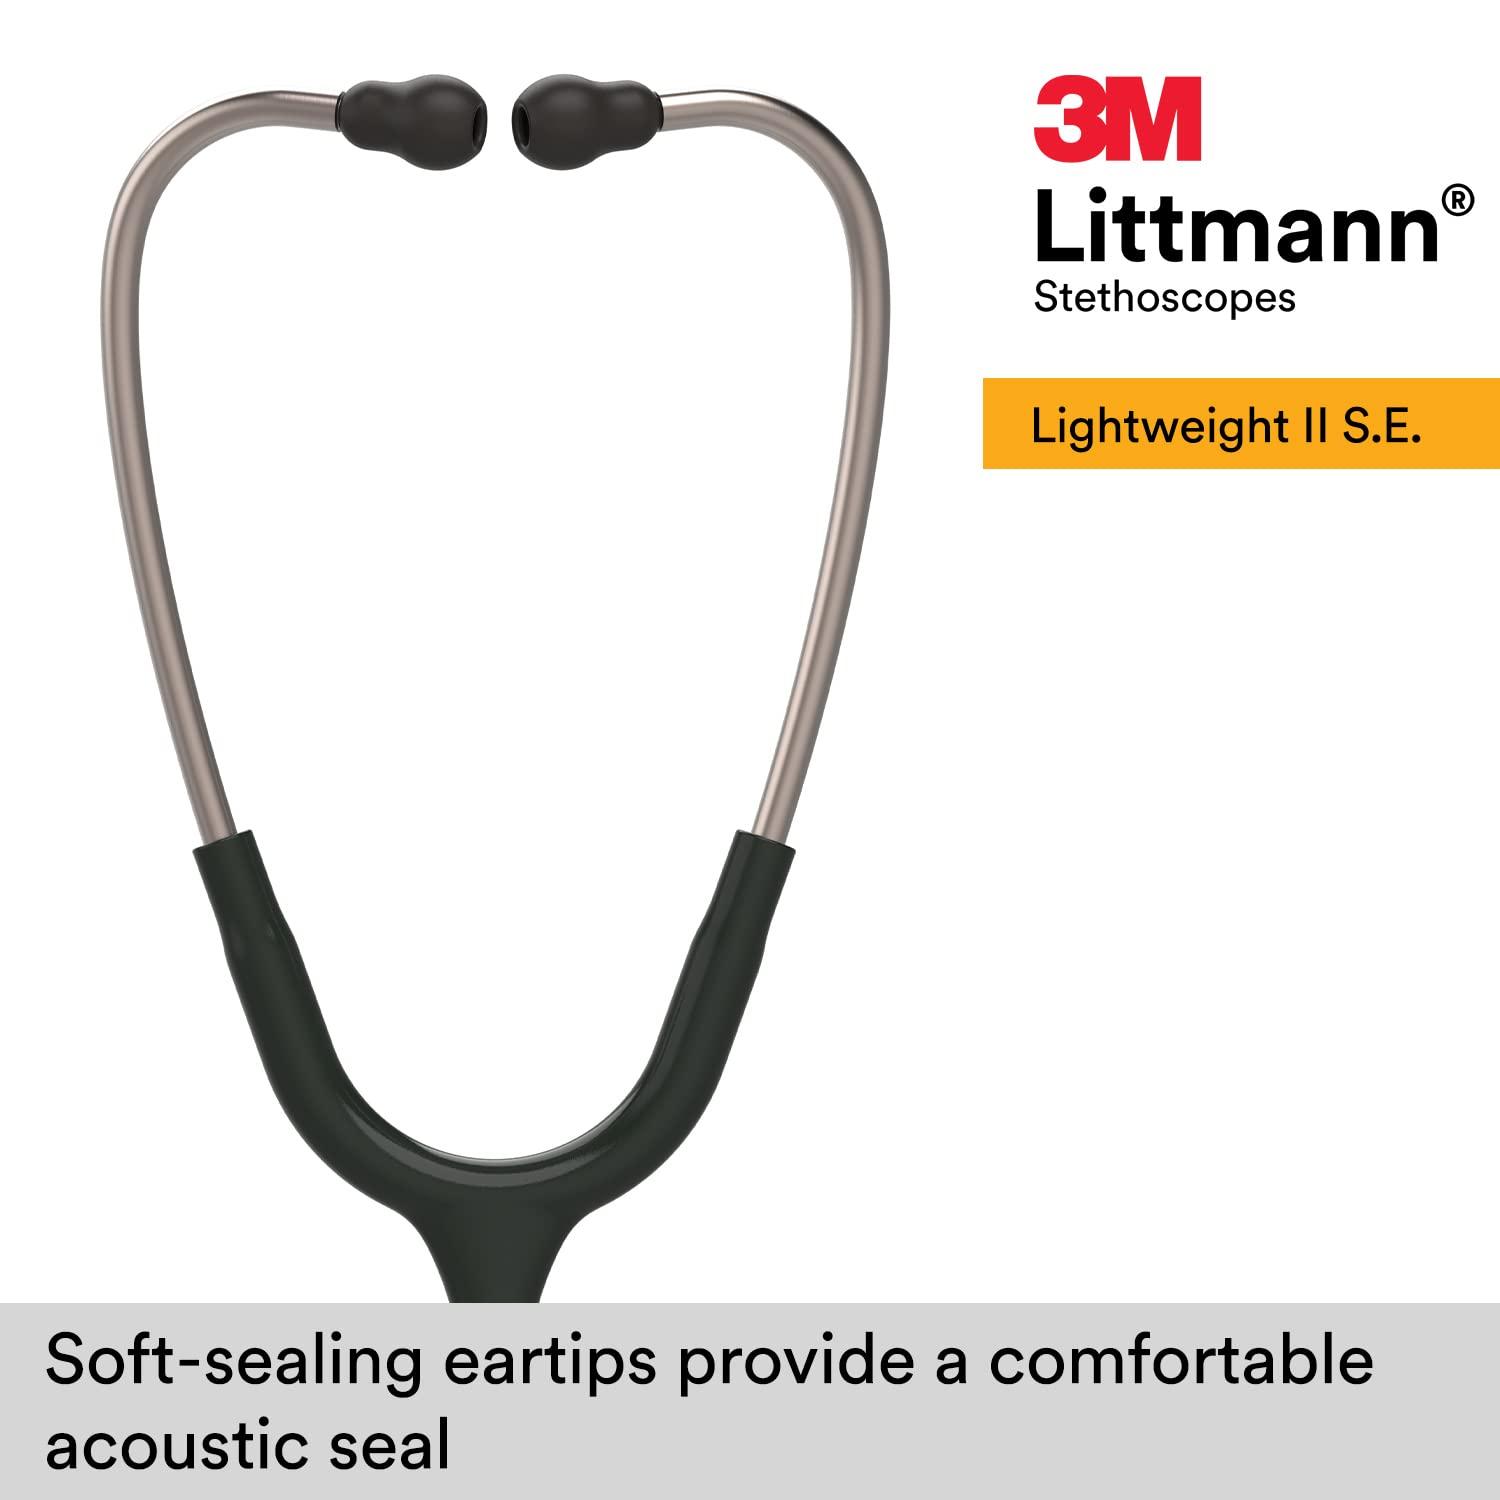 3M Littmann Classic III Stethoscope - Black for sale online